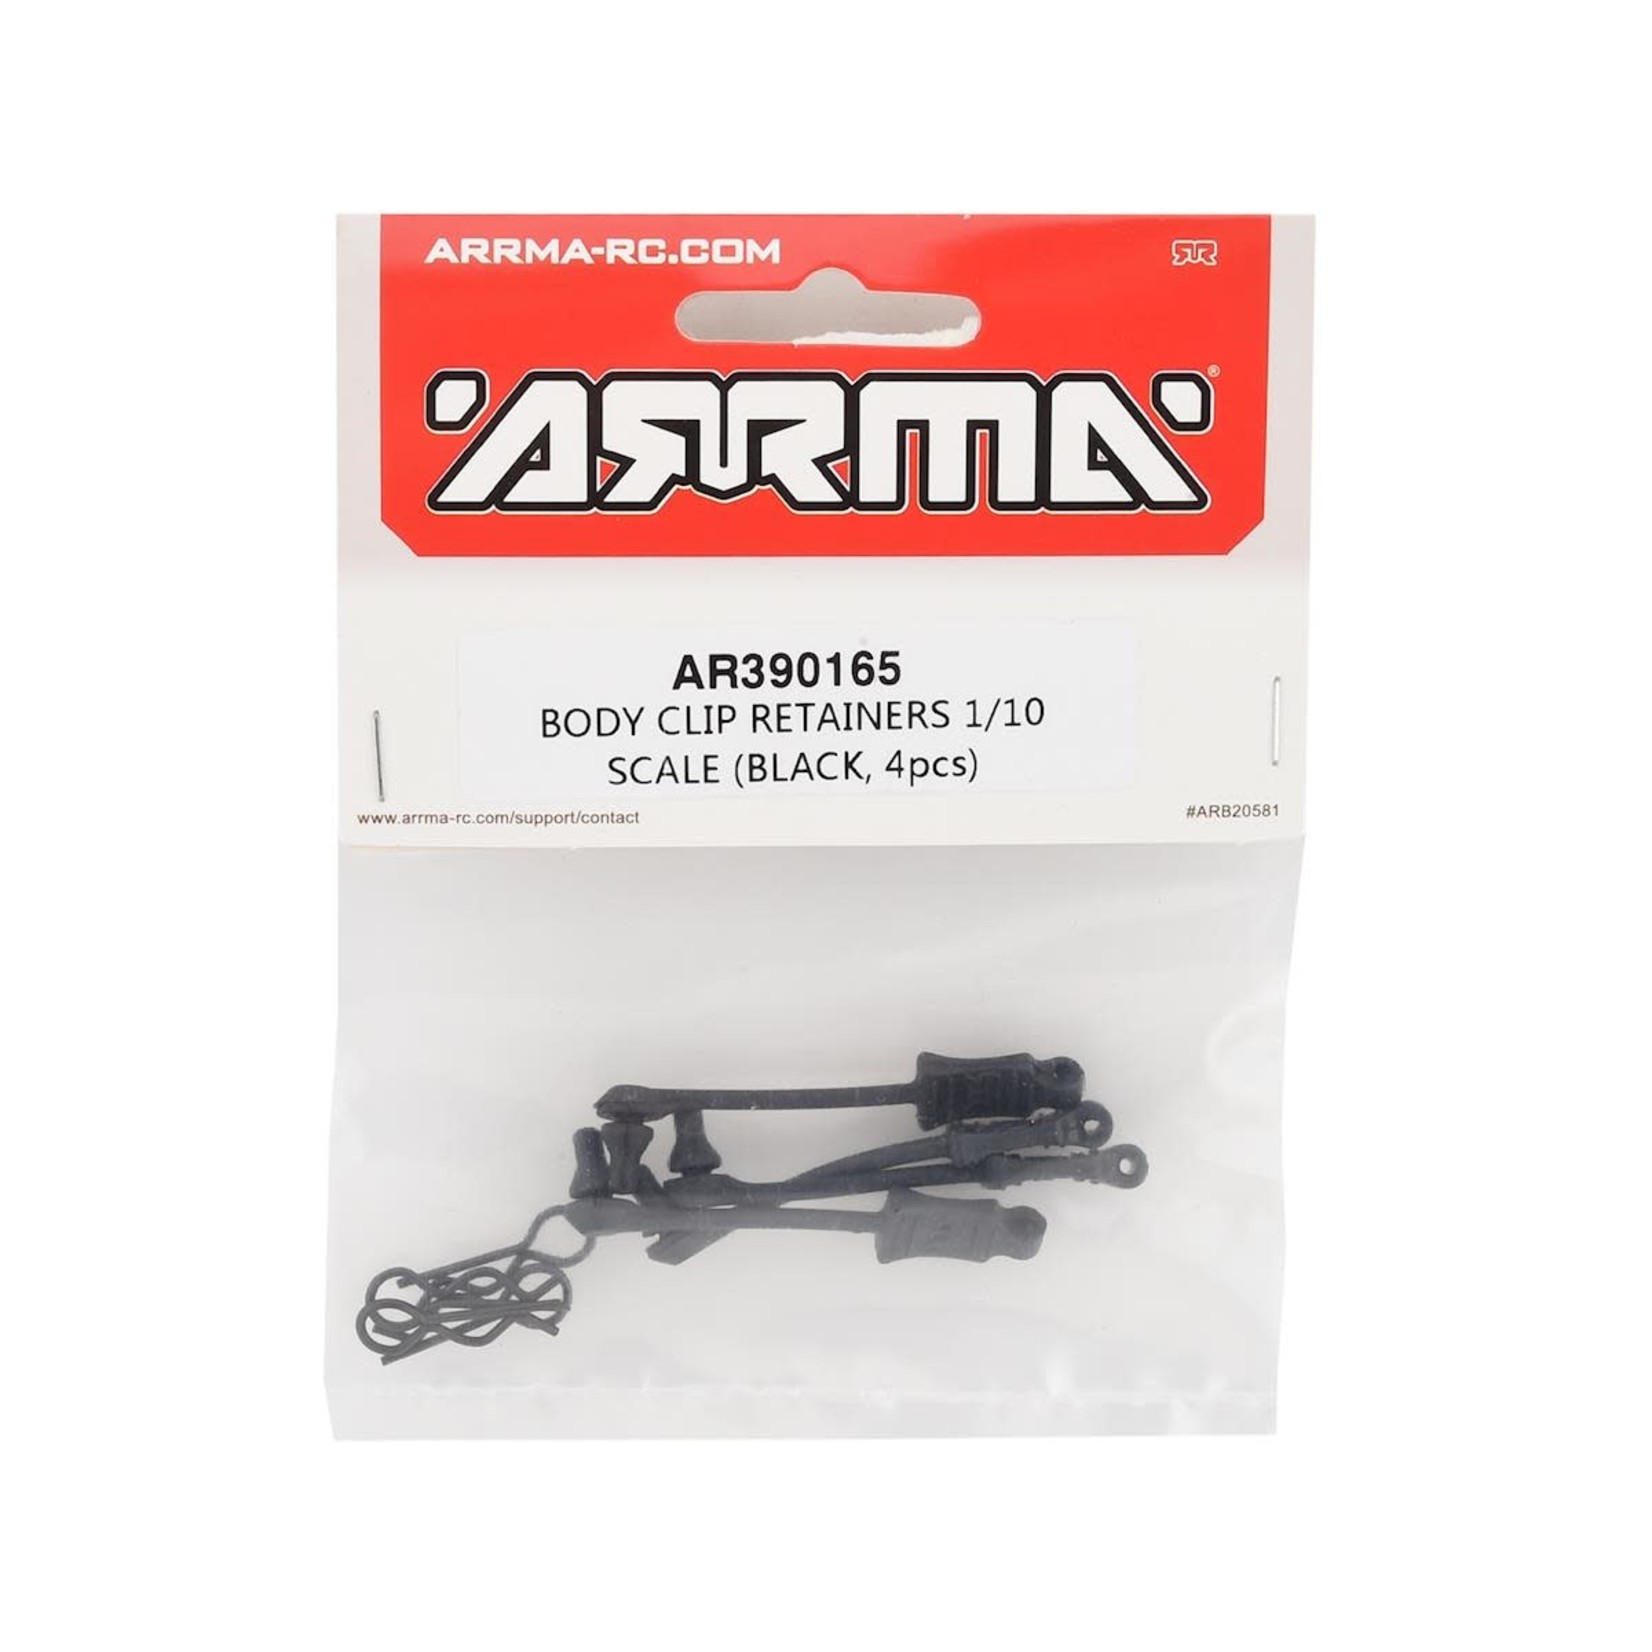 ARRMA Arrma 1/10 Body Clip Retainer (Black) (4) #AR390165